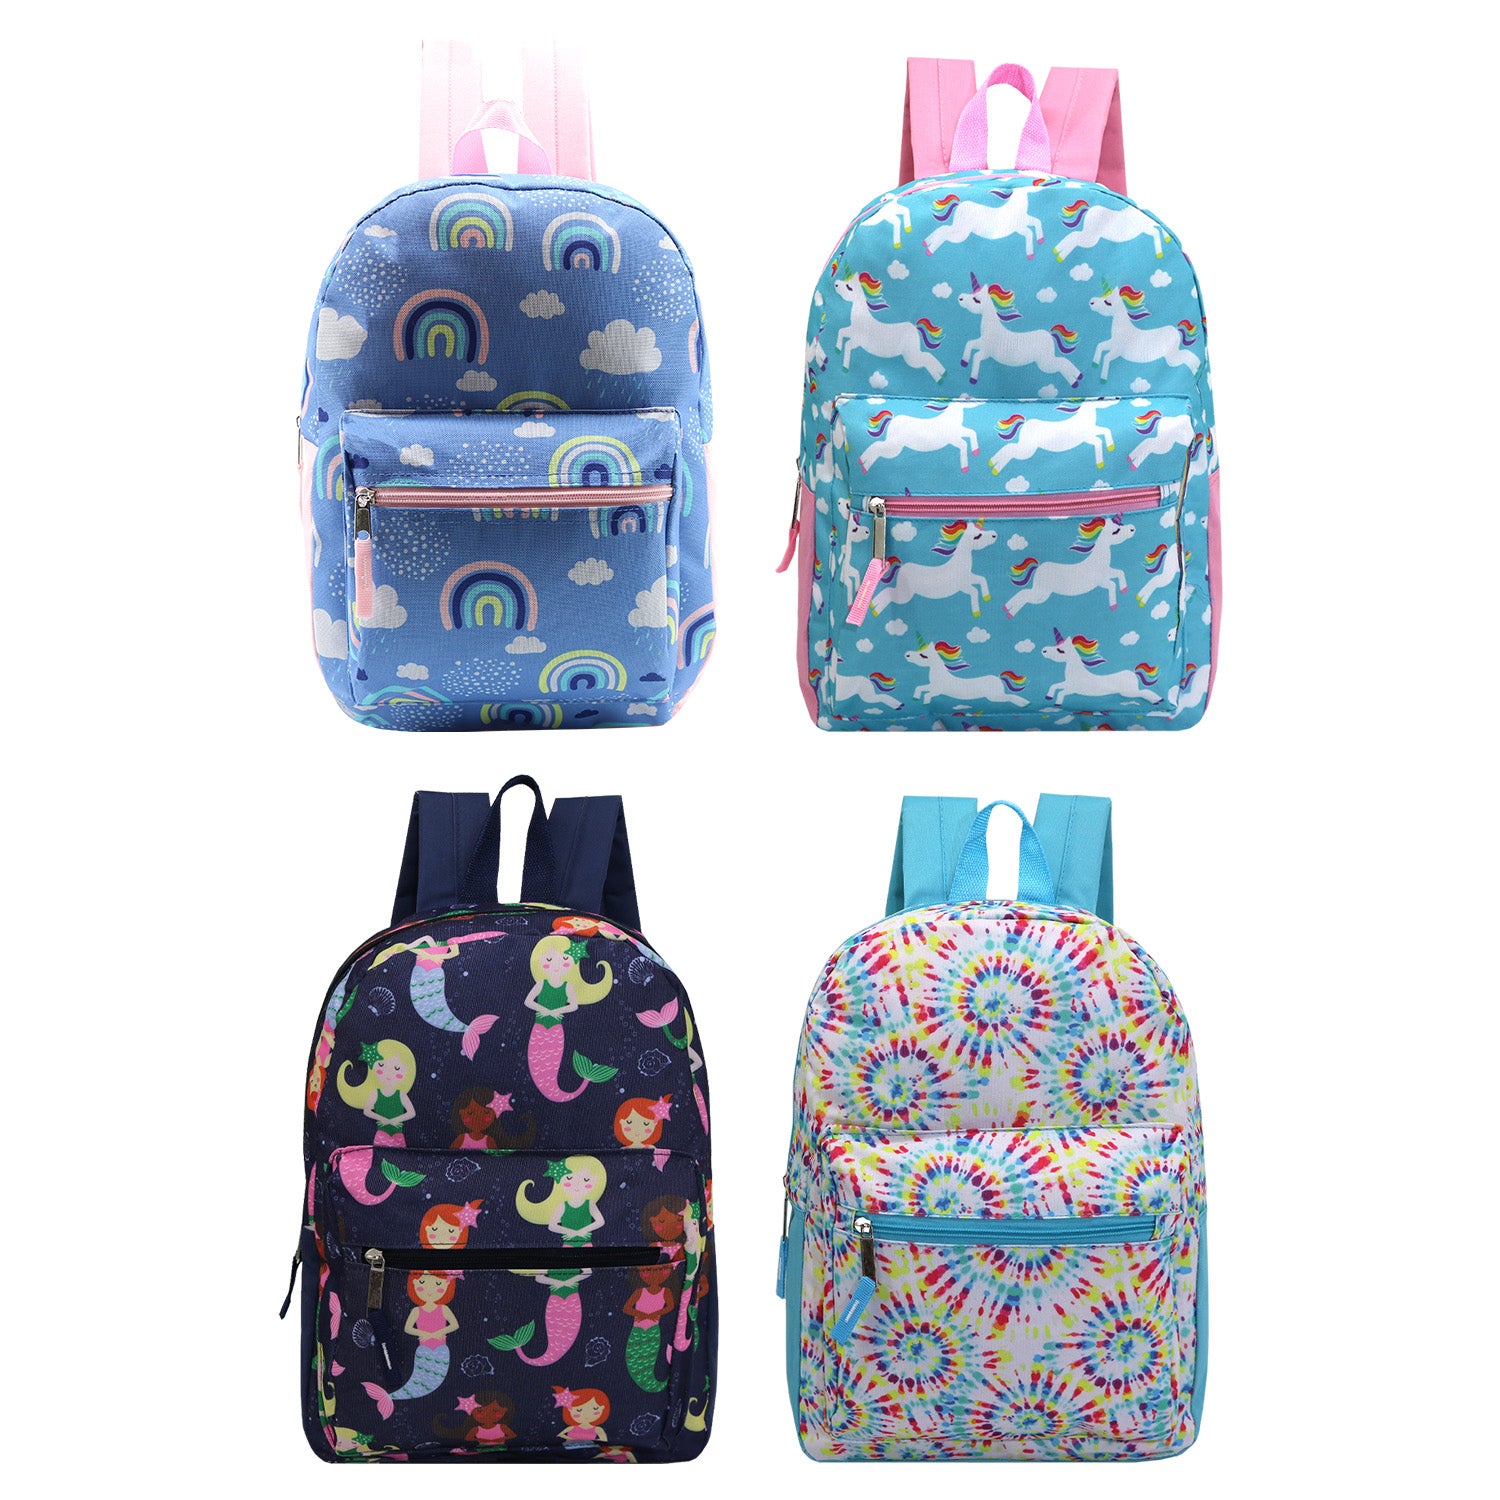 15" Kids Basic Wholesale Backpack in Assorted Prints- Bulk Case of 24